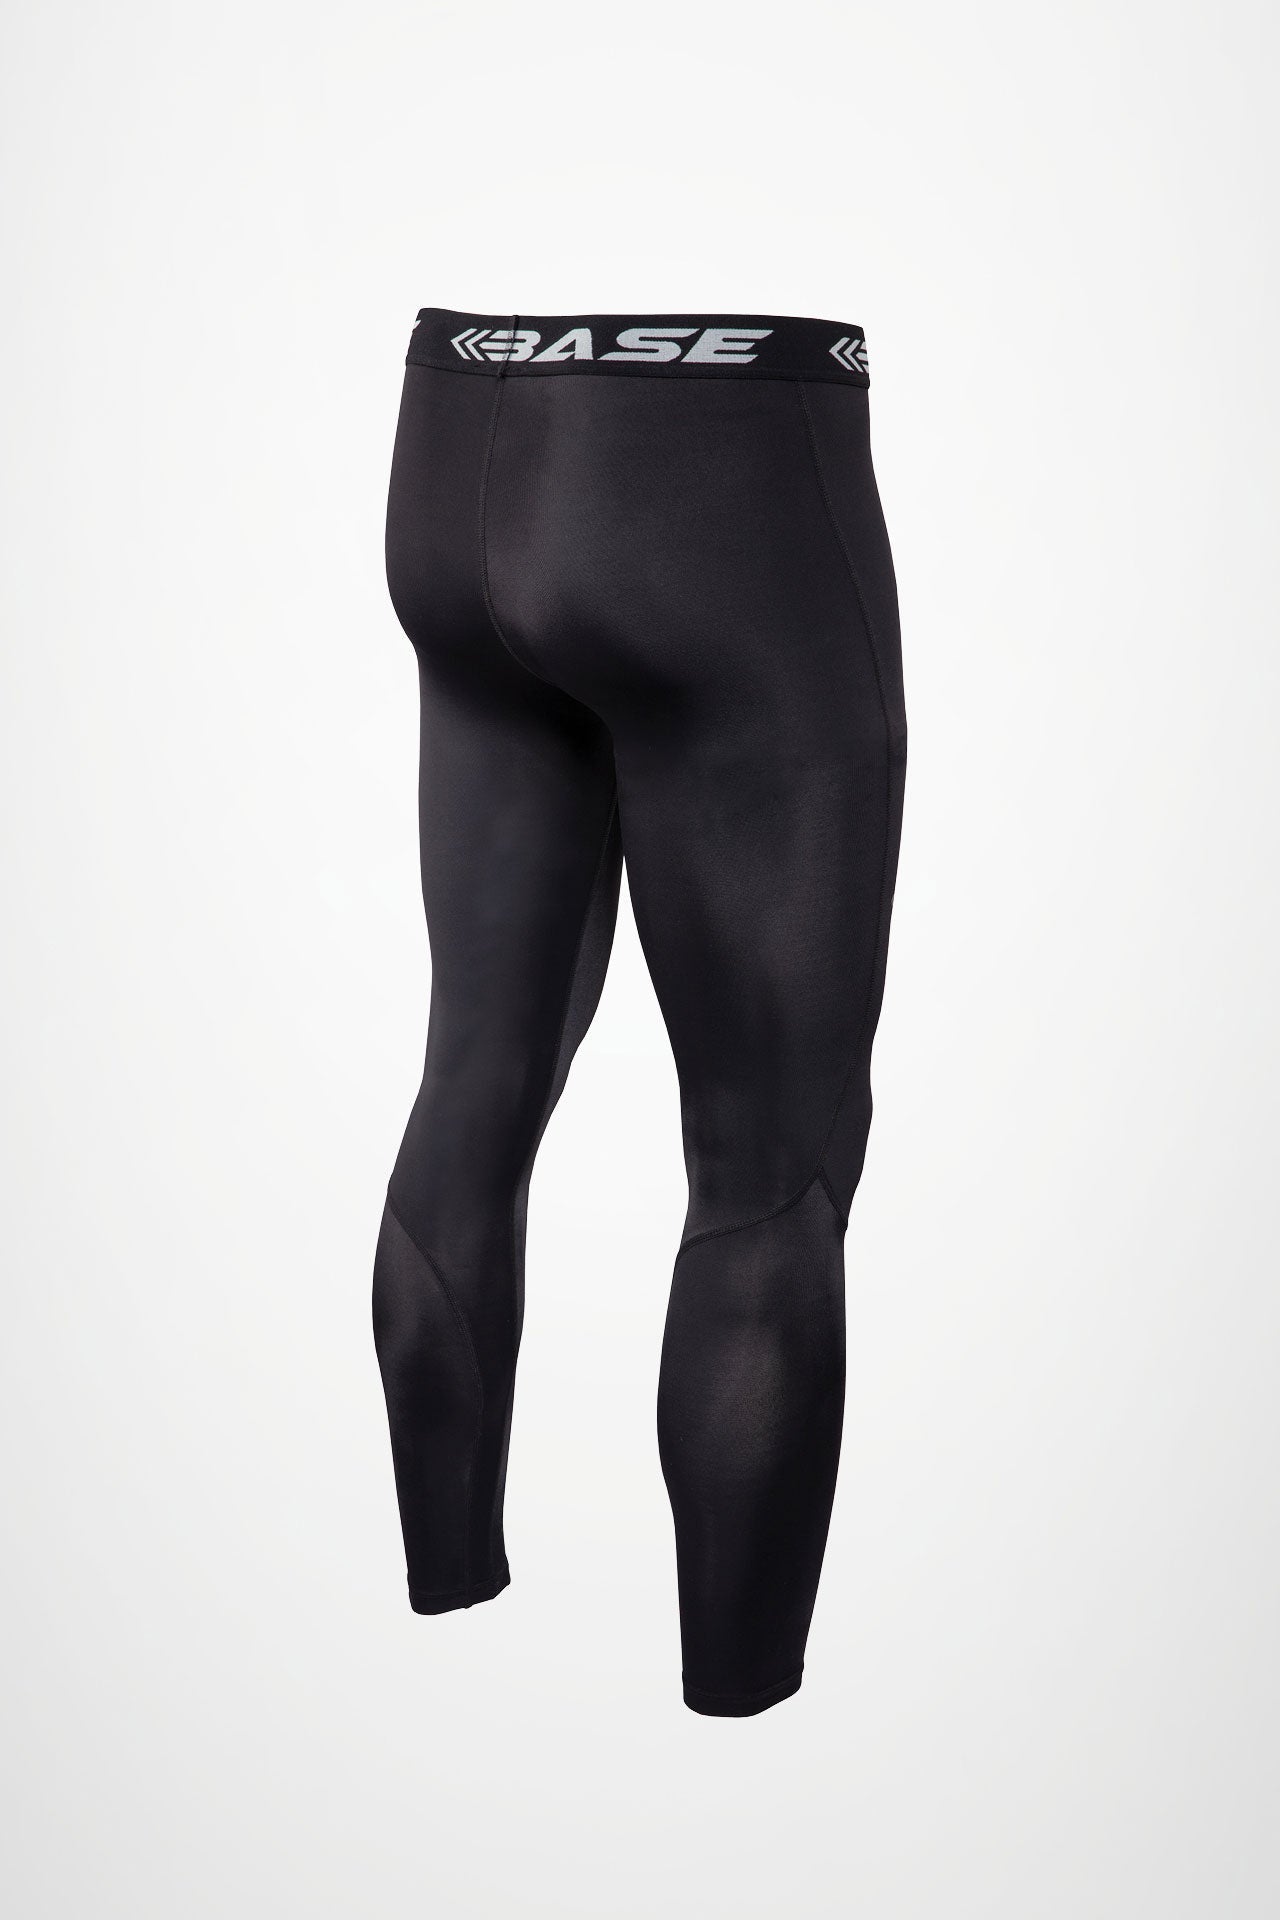 BASE Compression tights BASE Men's Compression Tights - Black